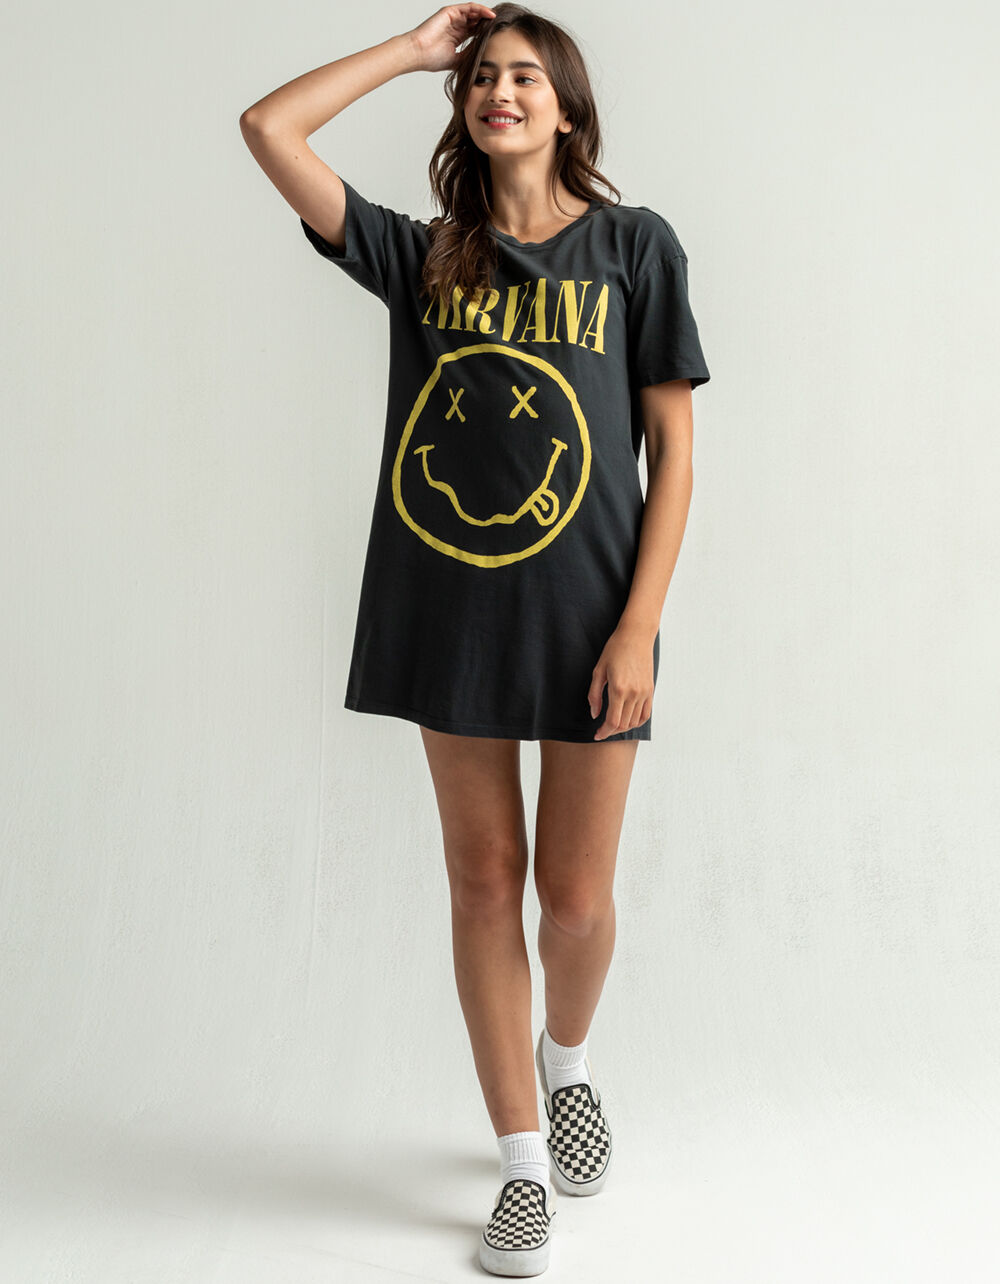 NIRVANA Smiley Womens T-Shirt Dress - BLACK | Tillys